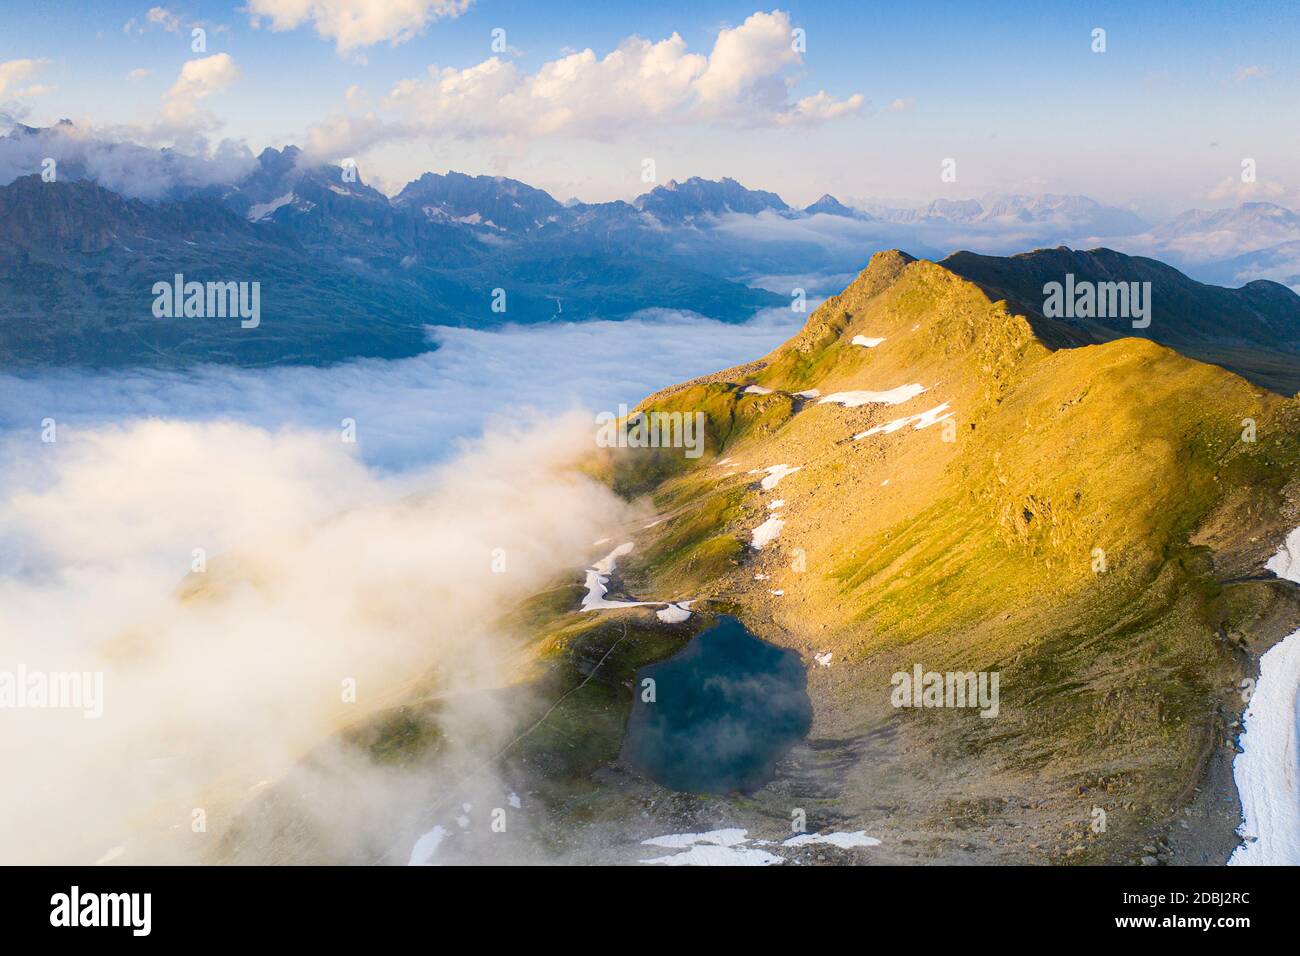 Schwarziseeli lake and Stotzigen Firsten mountain emerging from a sea of clouds, aerial view, Furka Pass, Canton Uri, Switzerland, Europe Stock Photo